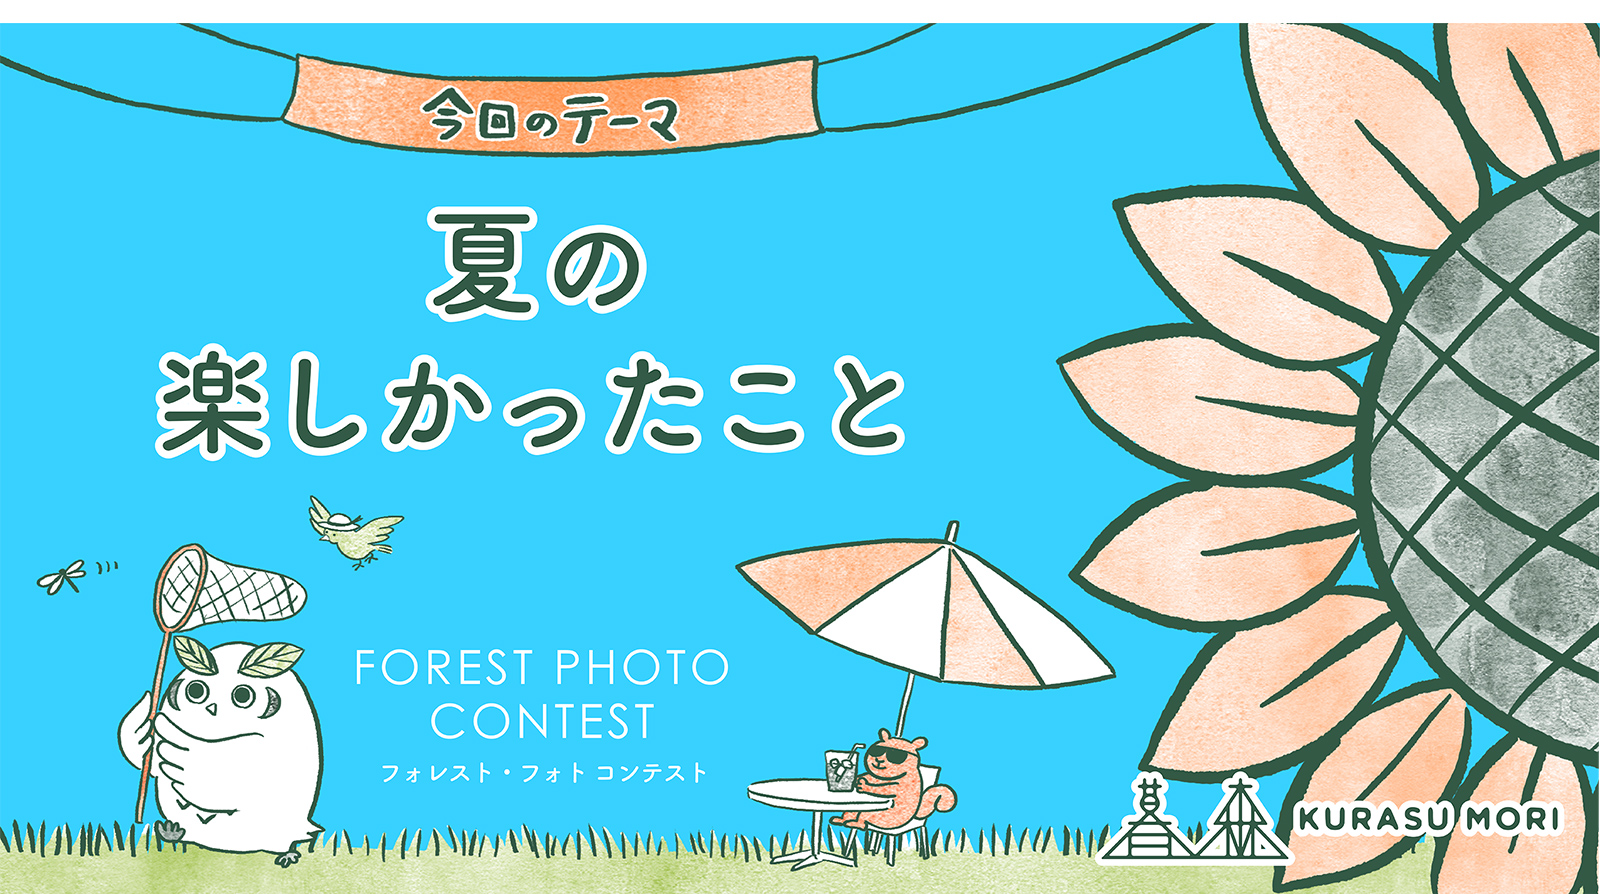 FOREST PHOTO CONTEST フォレスト・フォト コンテスト　今回のテーマ「樹木・草花」